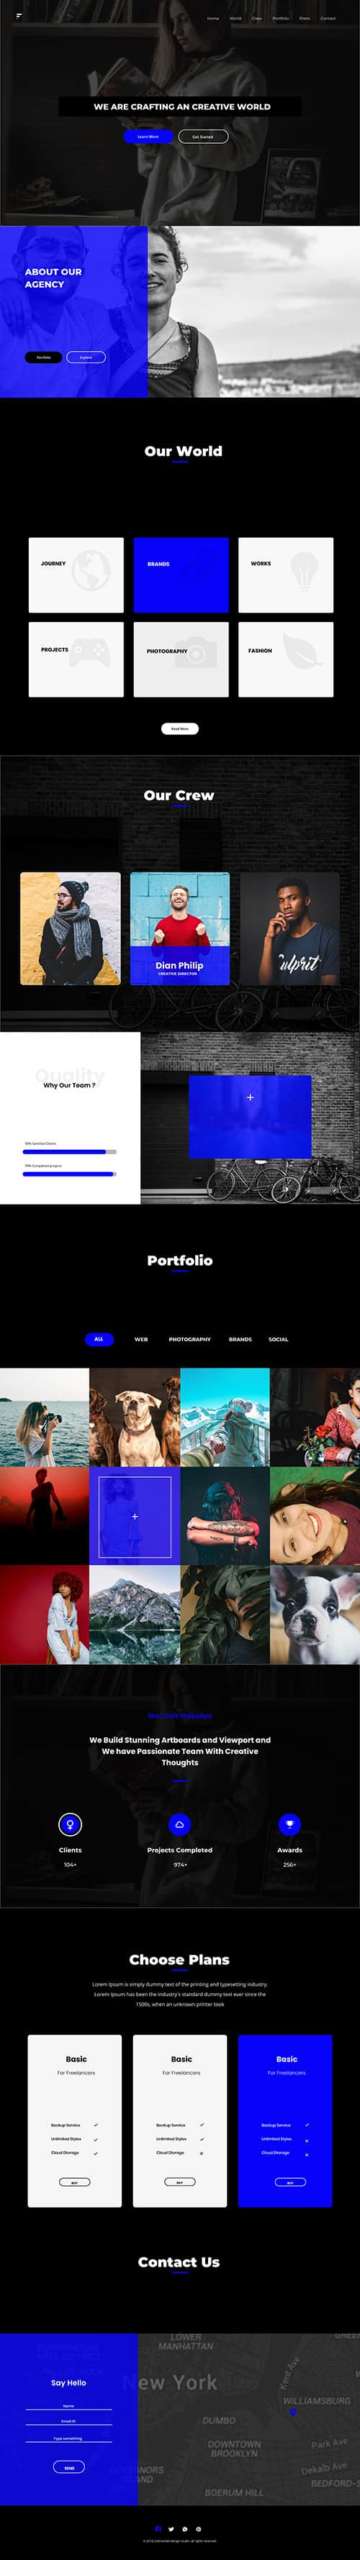 creative agency web design